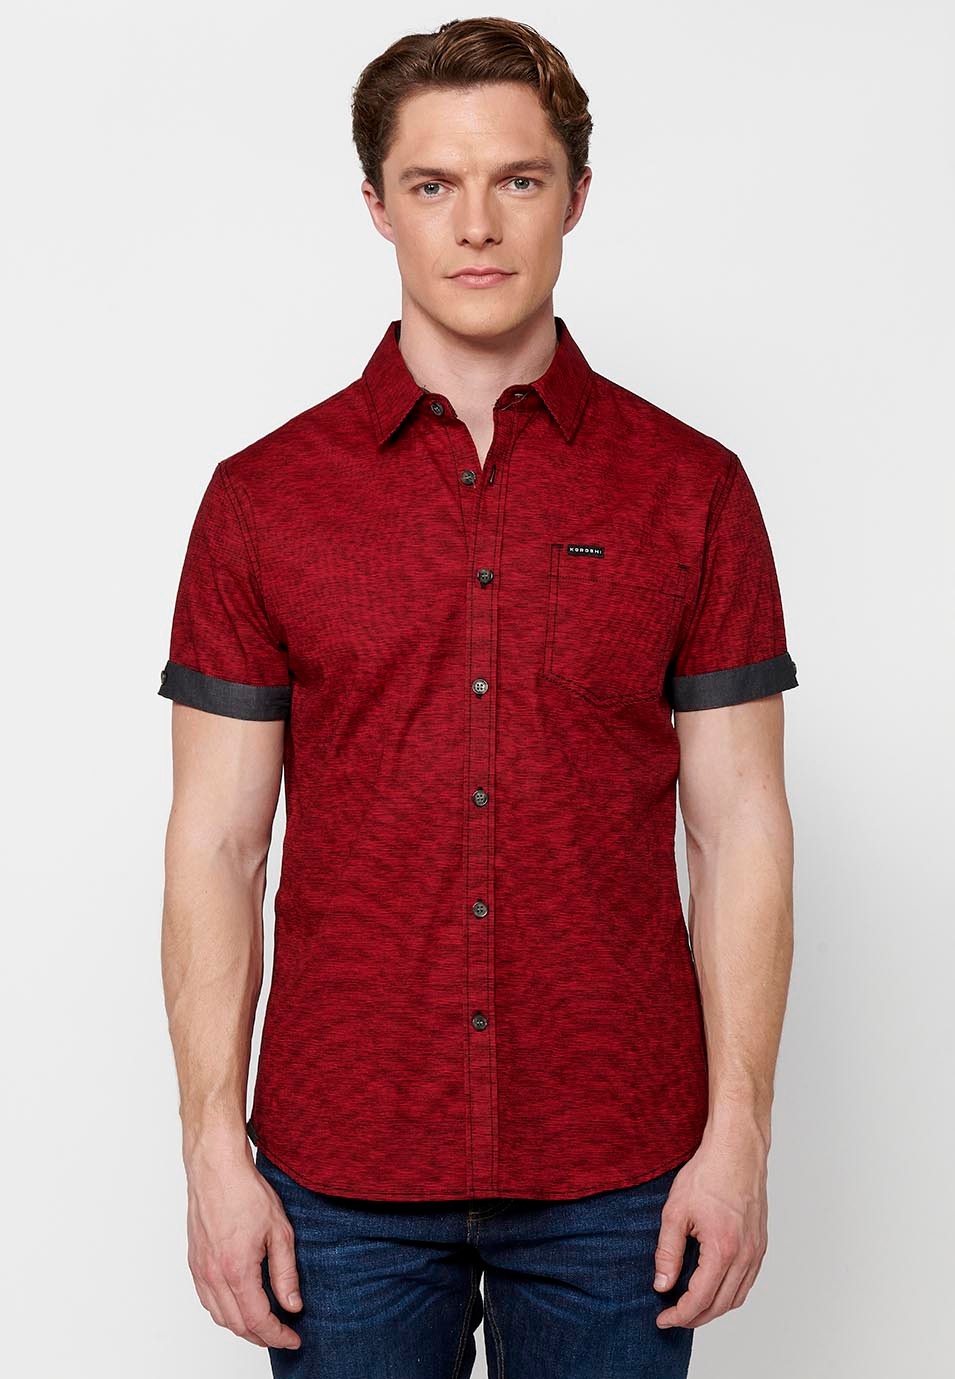 Short sleeve cotton shirt, red color for men